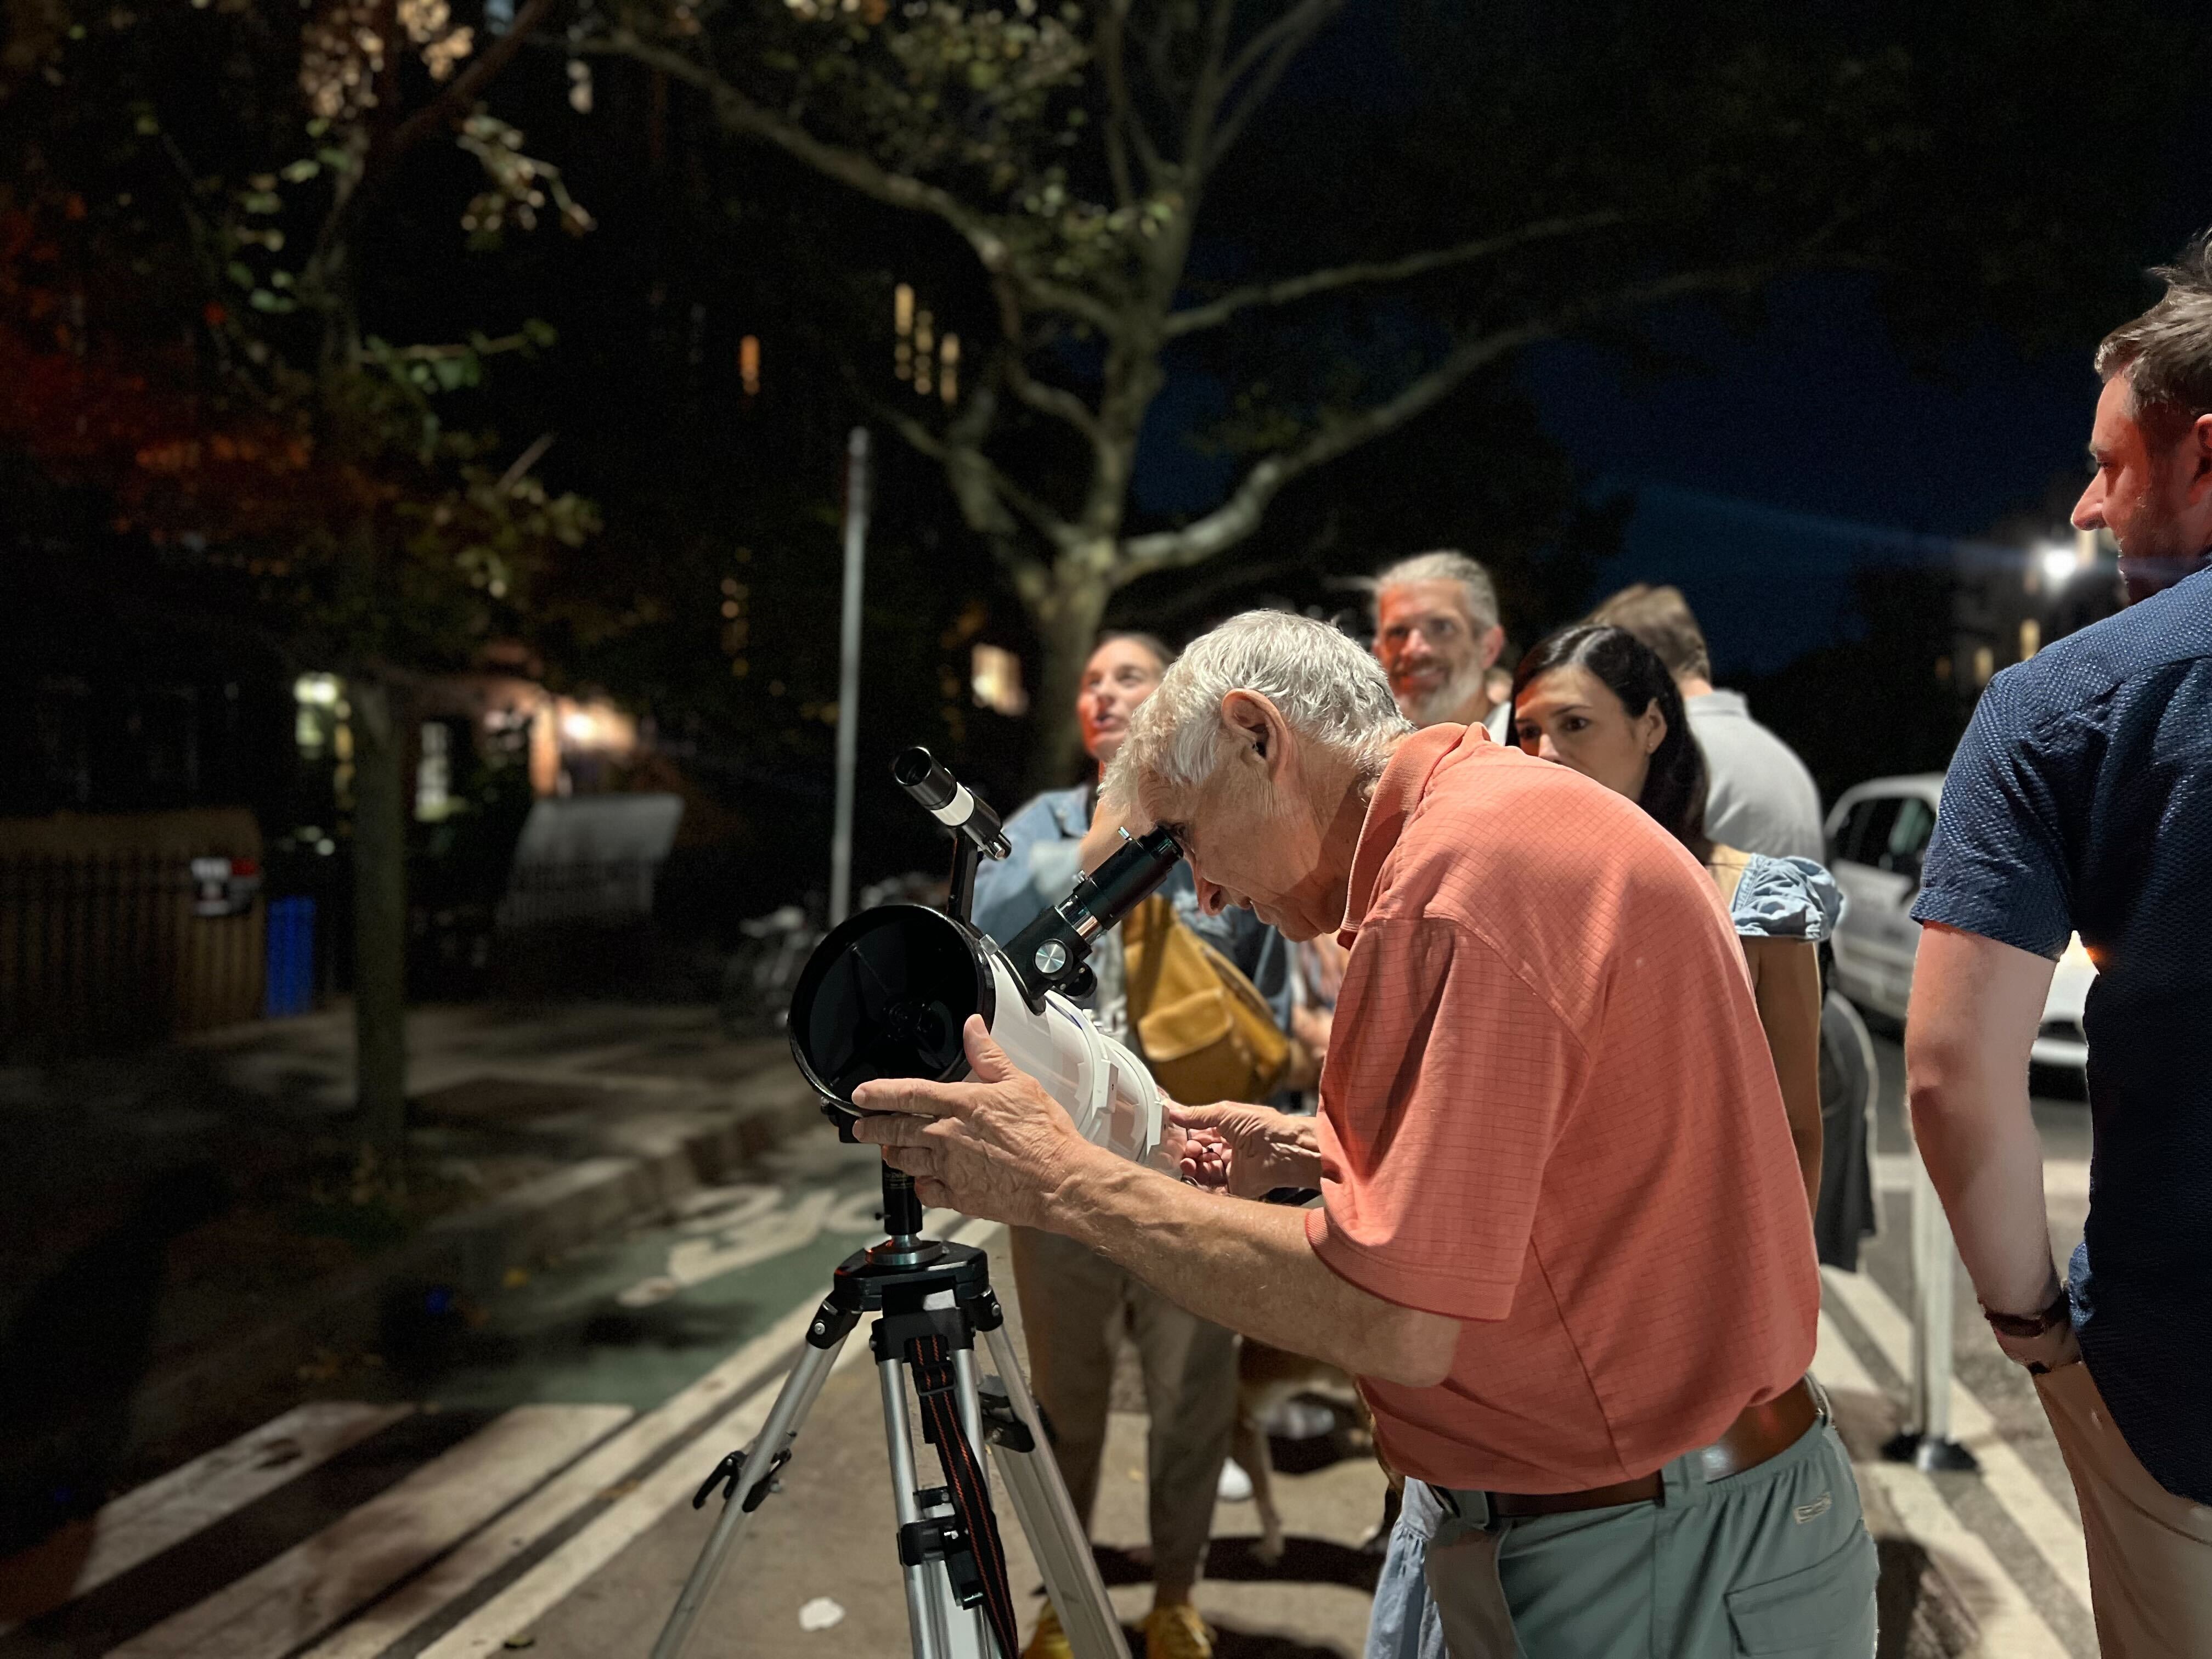 Astronomy lovers telescope transforms Park Slope into nighttime planetarium